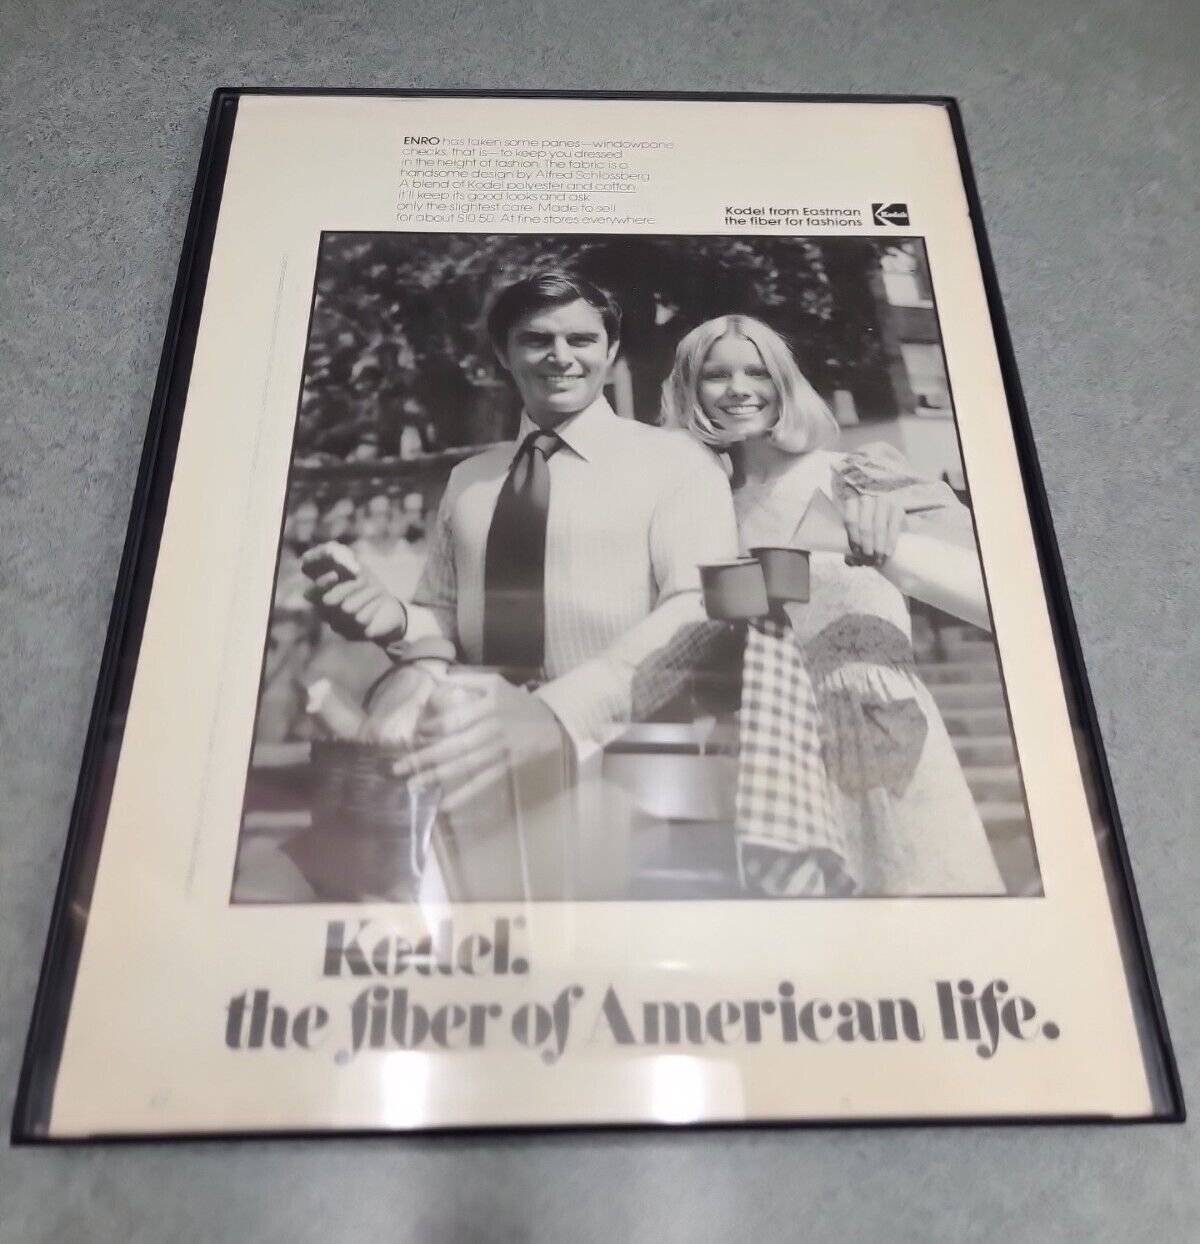 Kodel Eastman Kodak Print Ad 1972 Fiber Of American Life Framed 8.5x11 